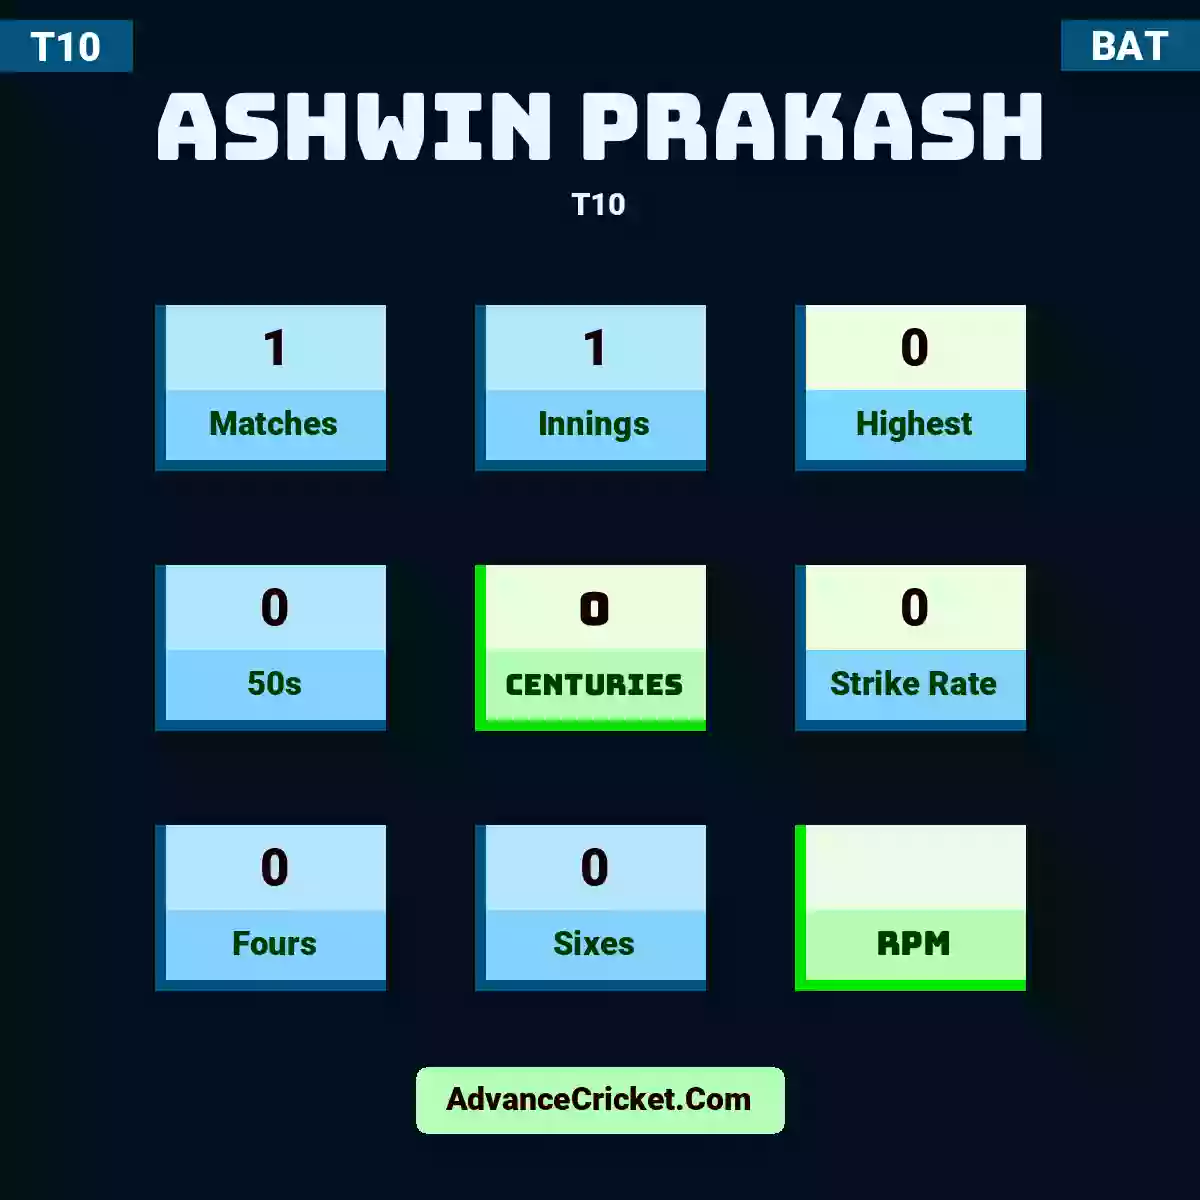 Ashwin Prakash T10 , Ashwin Prakash played 1 matches, scored 0 runs as highest, 0 half-centuries, and 0 centuries, with a strike rate of 0. A.Prakash hit 0 fours and 0 sixes.